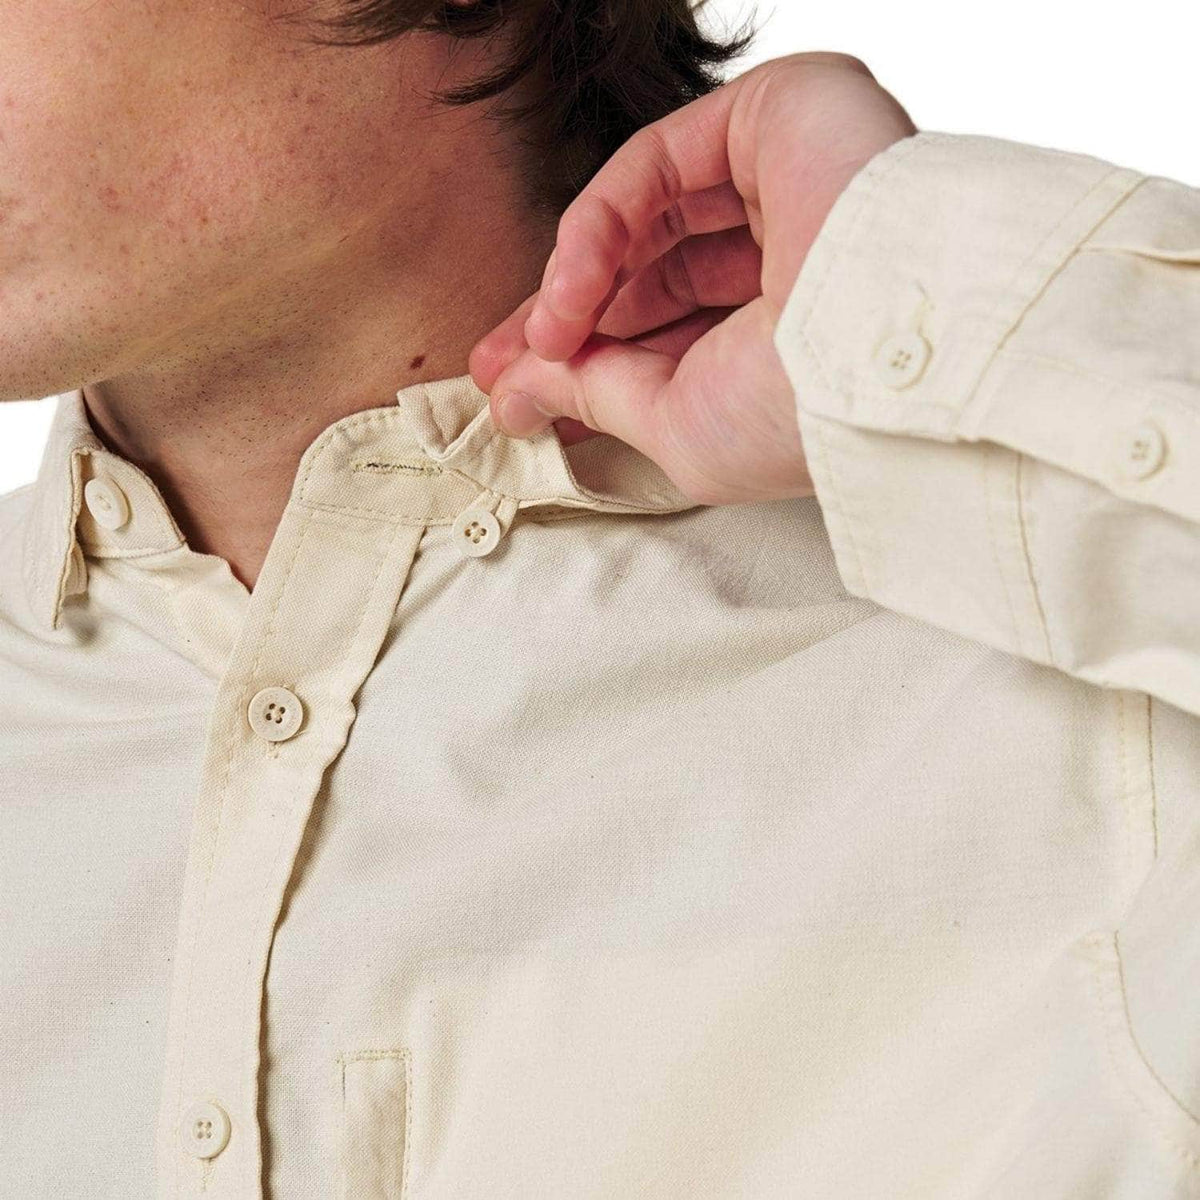 Globe Foundation Long Sleeve Shirt - Bleach Free - Dye Free - Mens Casual Shirt by Globe